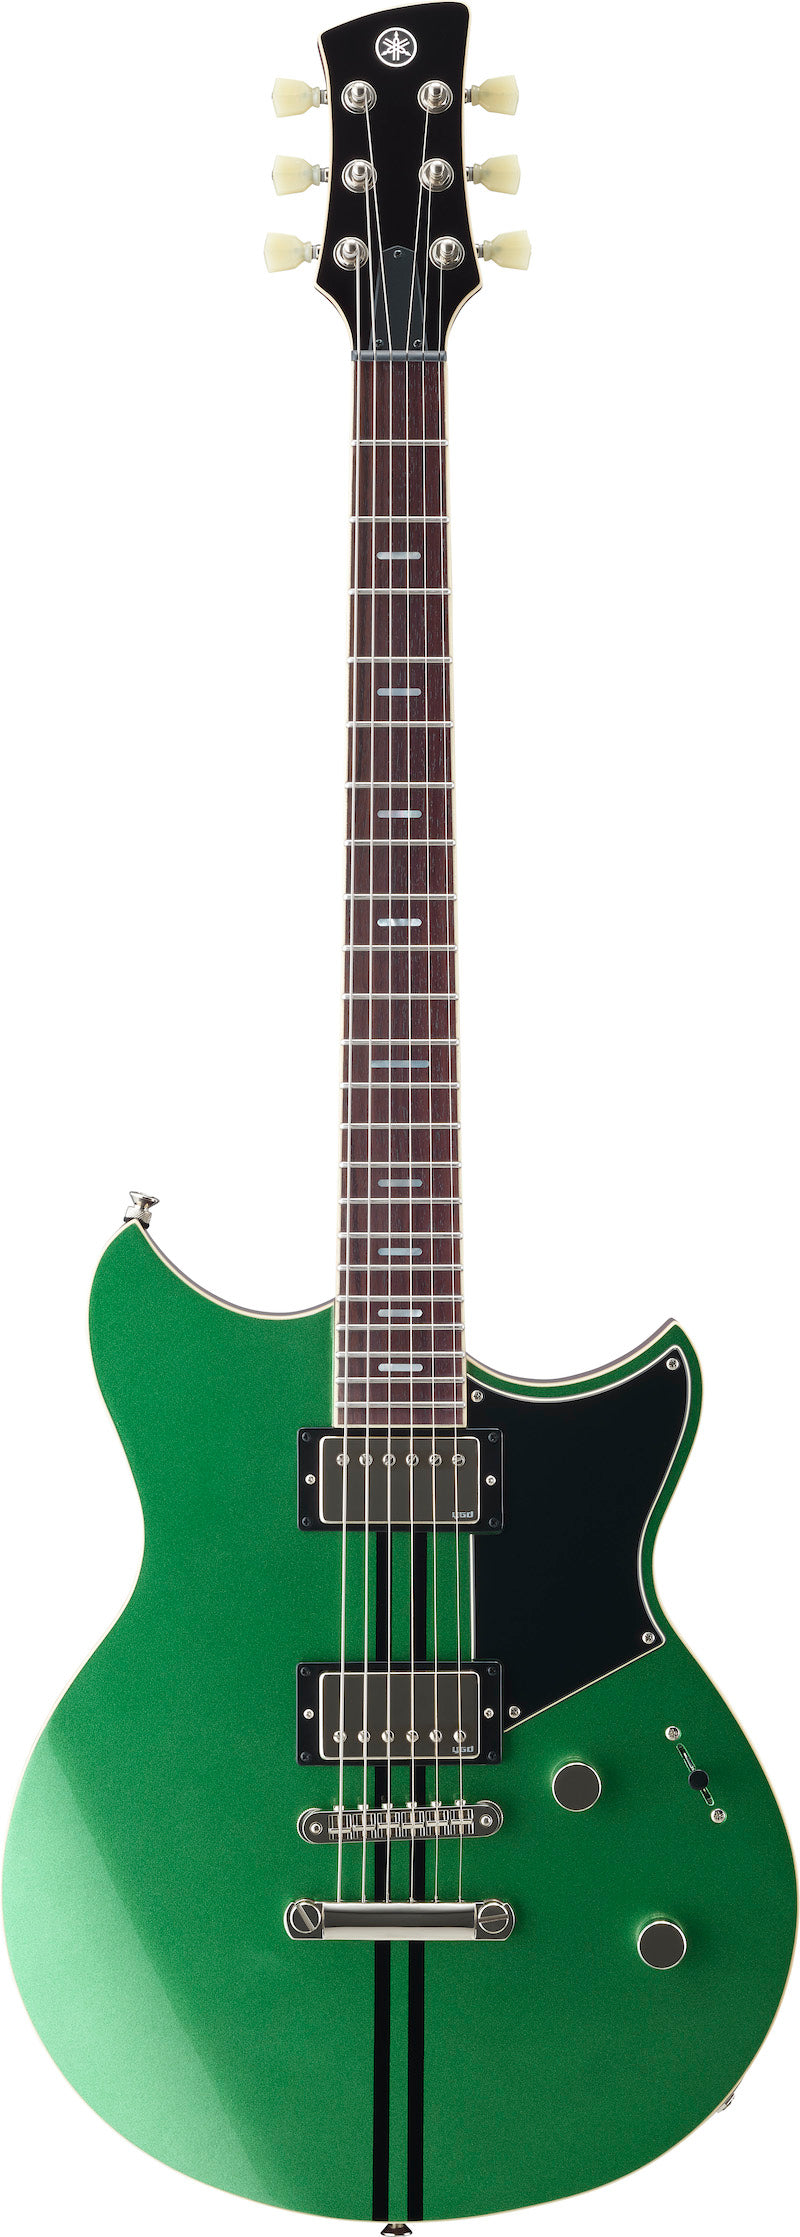 Yamaha Revstar RSS20 FLG Electric Guitar - Flash Green